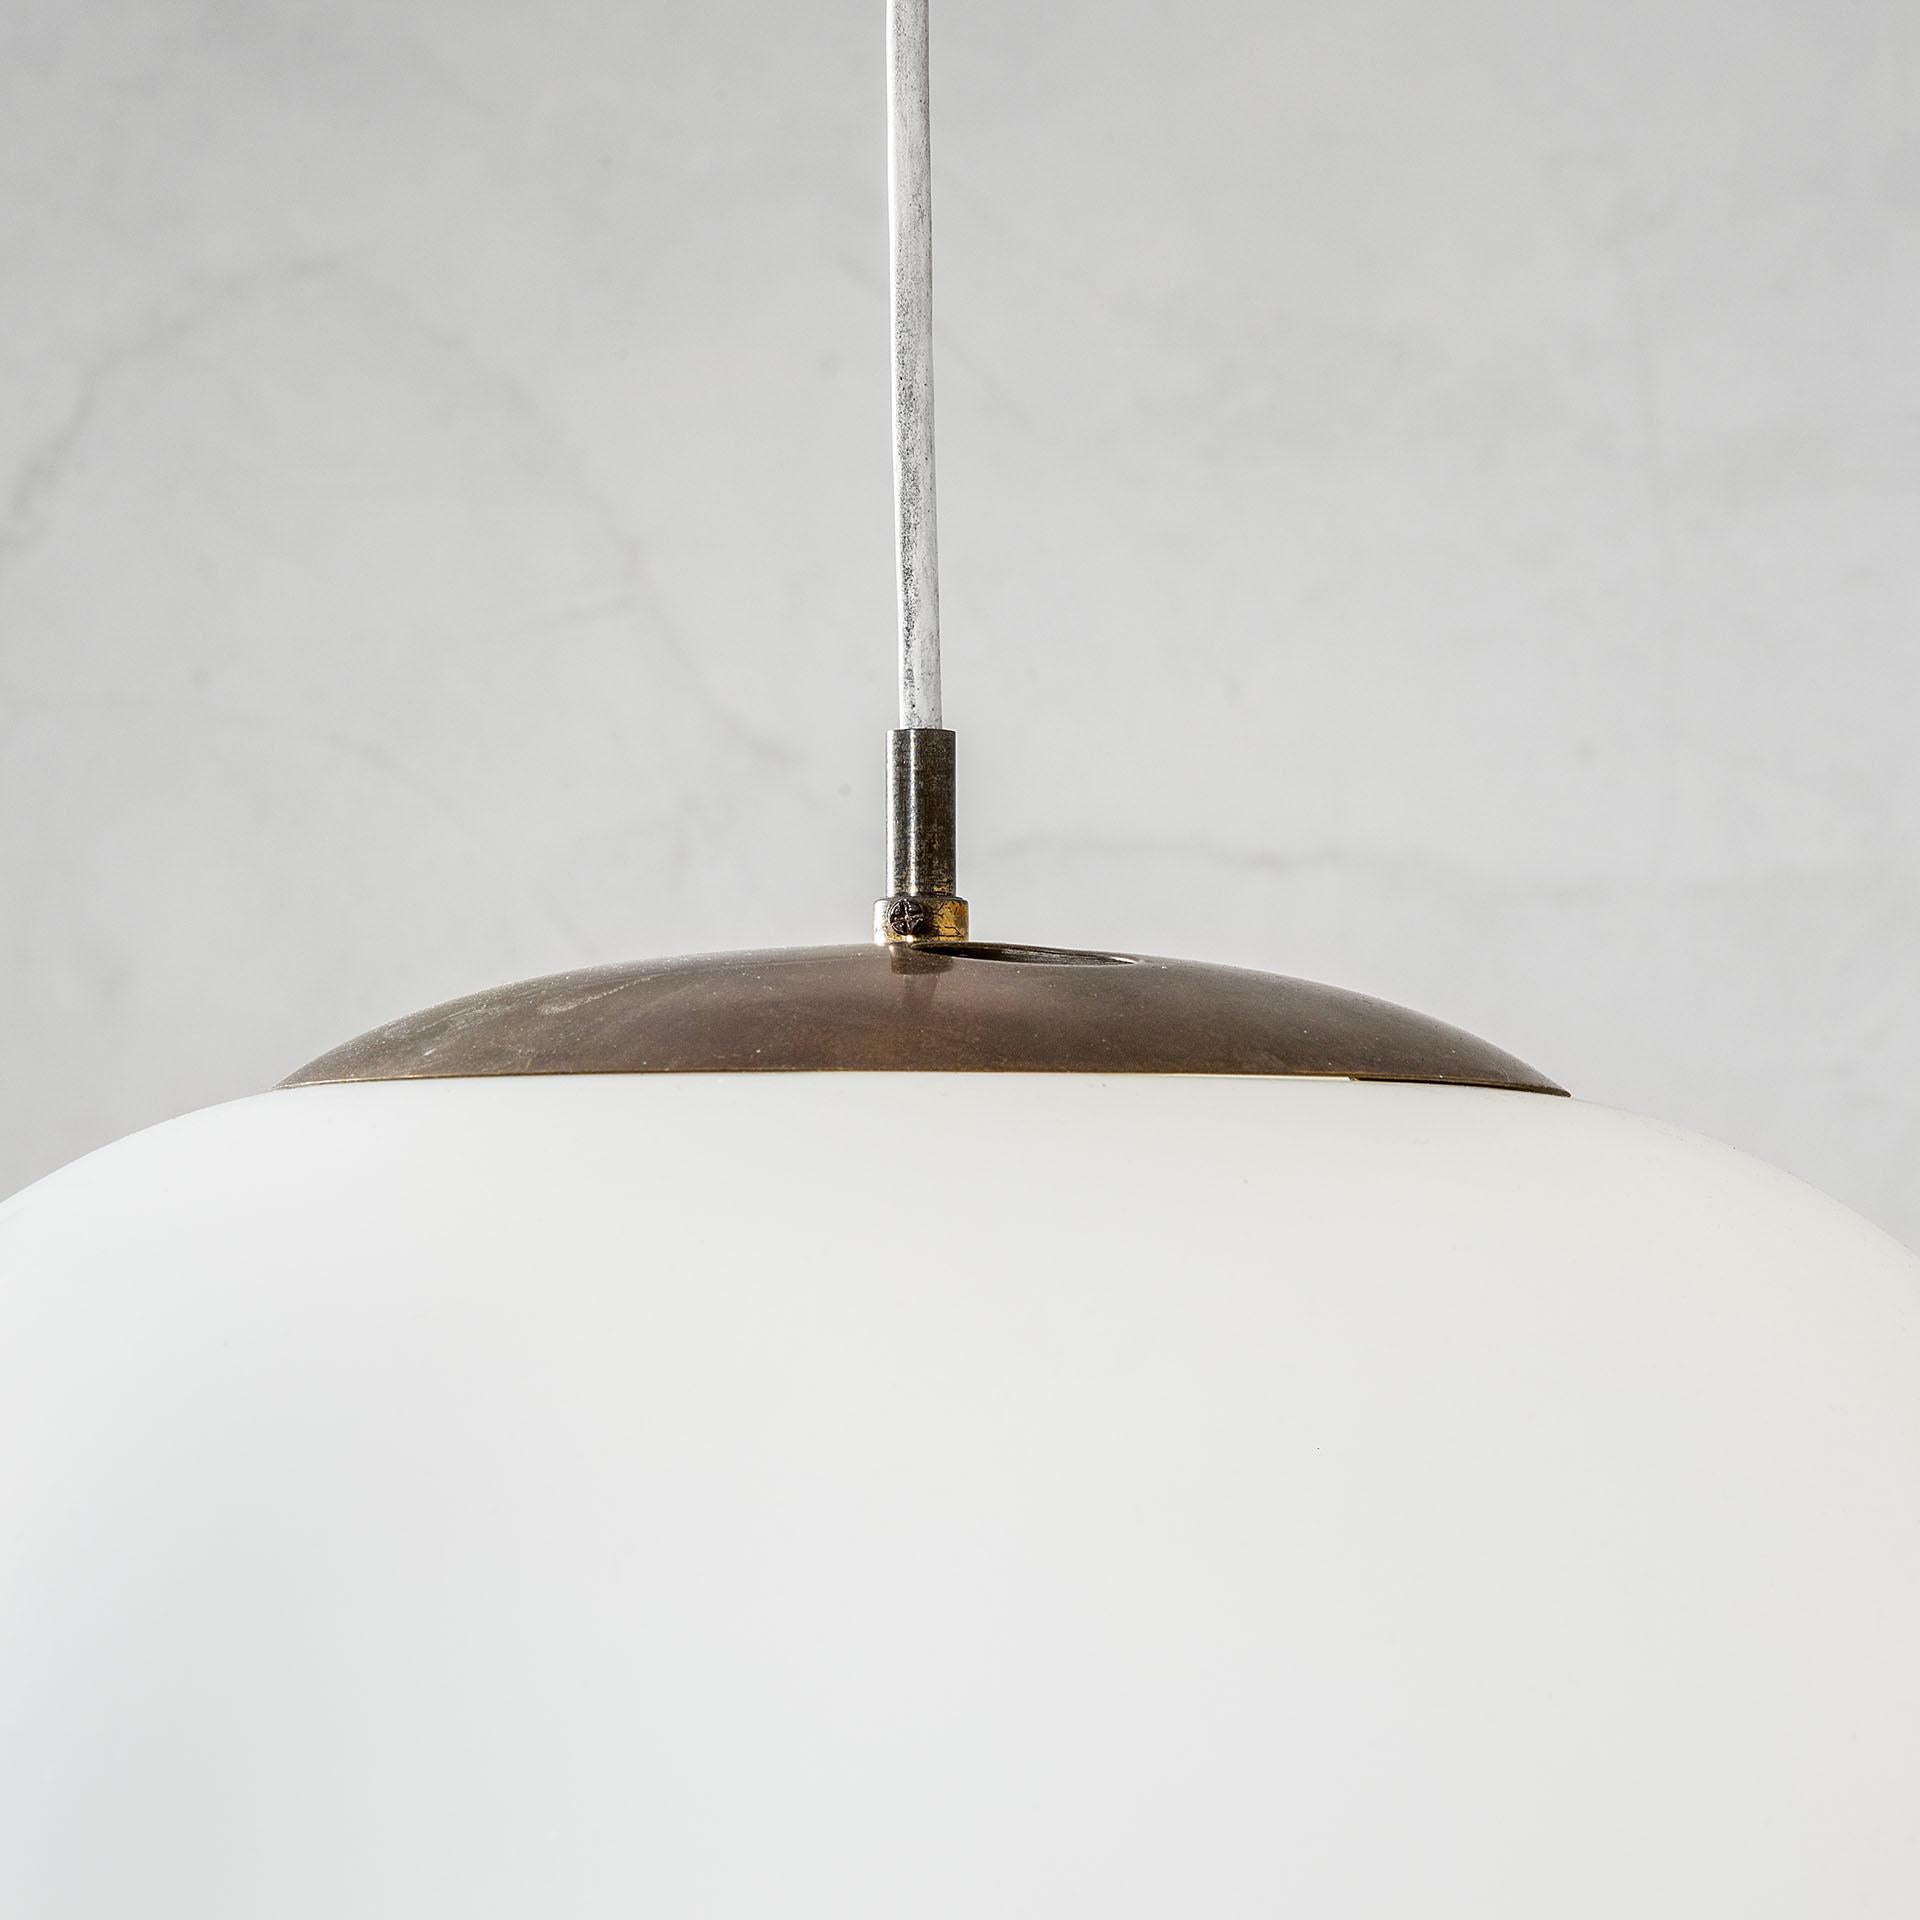 Italian 20th Century Stilnovo Pendant Lamp in Opaline Glass and Brass Details, 50s